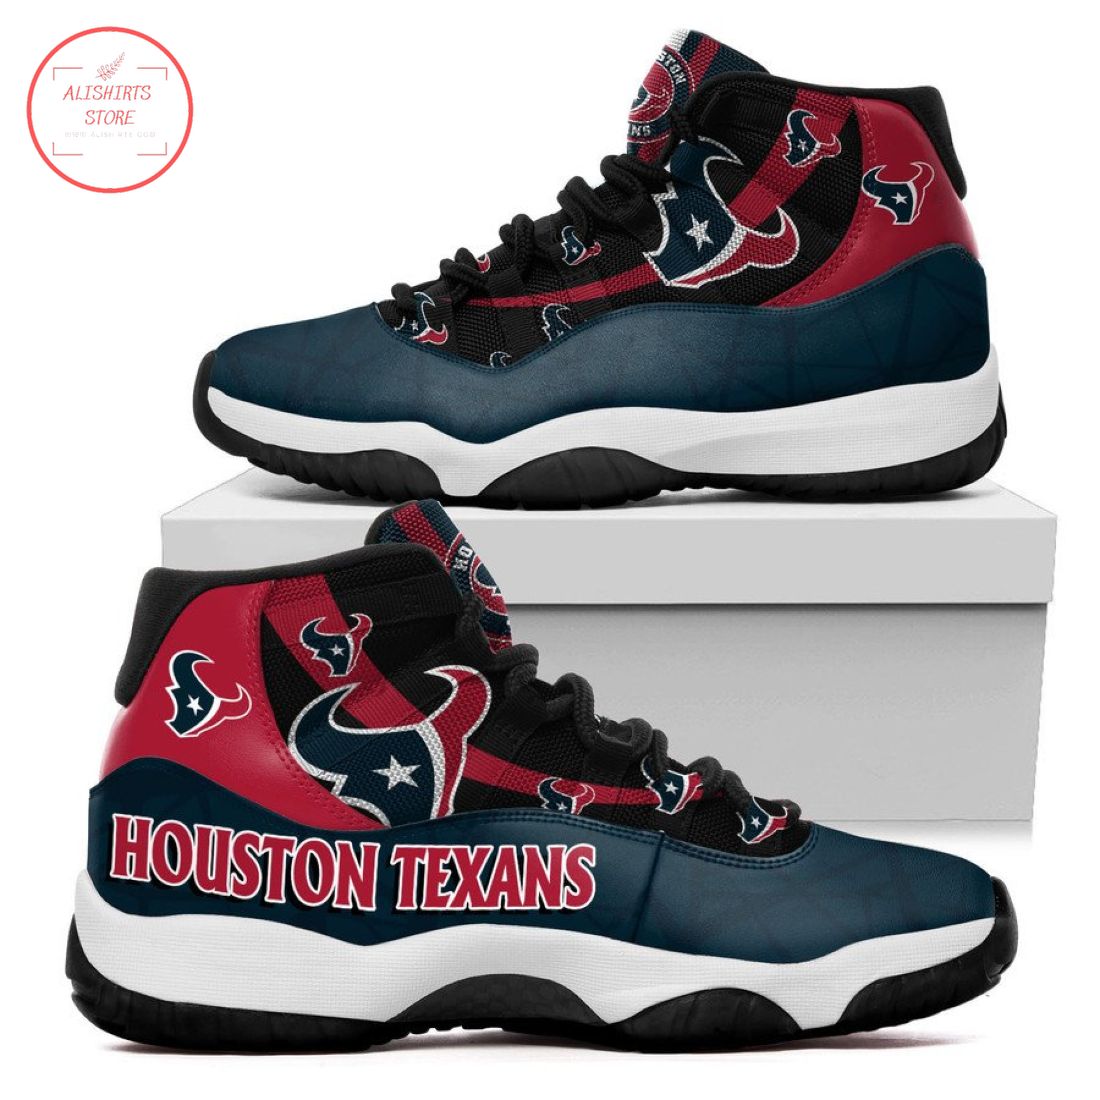 NFL Houston Texans New Air Jordan 11 Sneakers Shoes